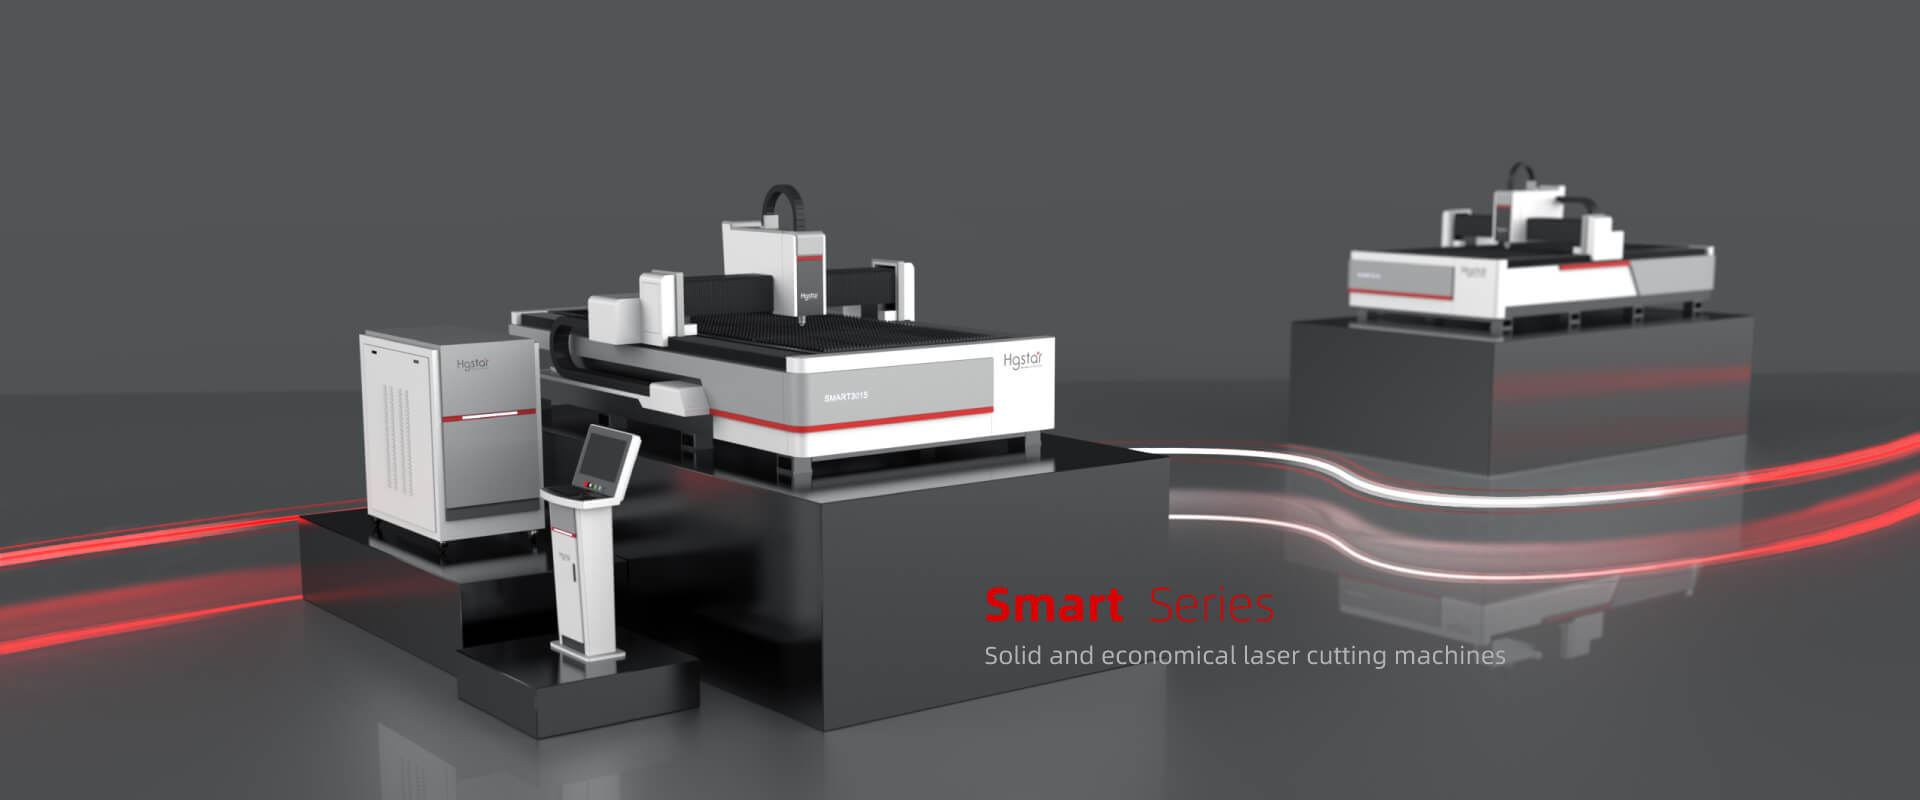 smart 3015 laser cutting equipment